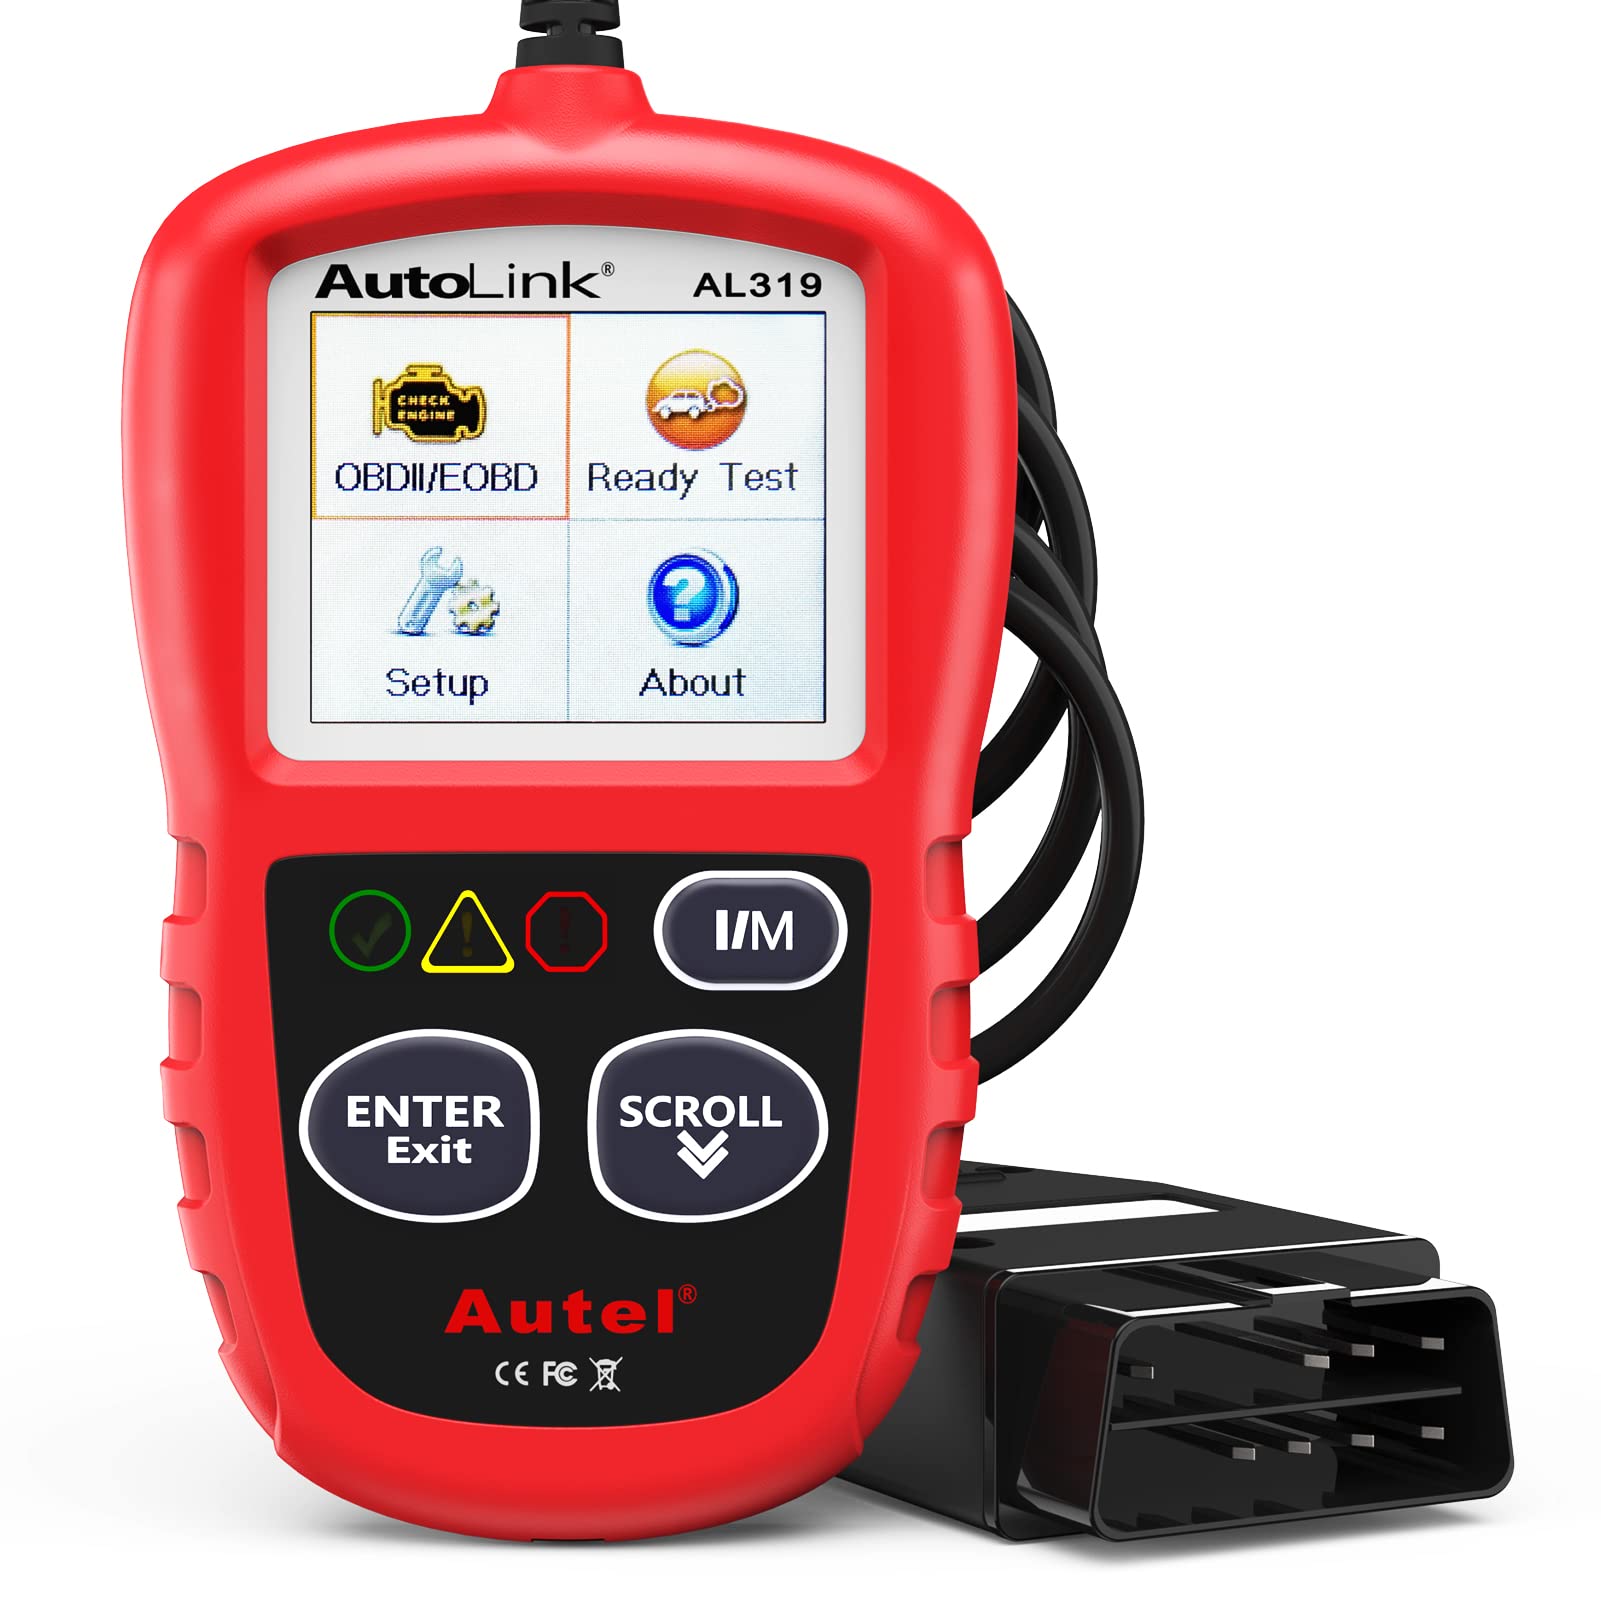 Autel Professional OBD2 Scanner AL319 Code Reader, Enhanced Check and Reset Engine Fault Code, Live Data, Freeze Frame, CAN Car 